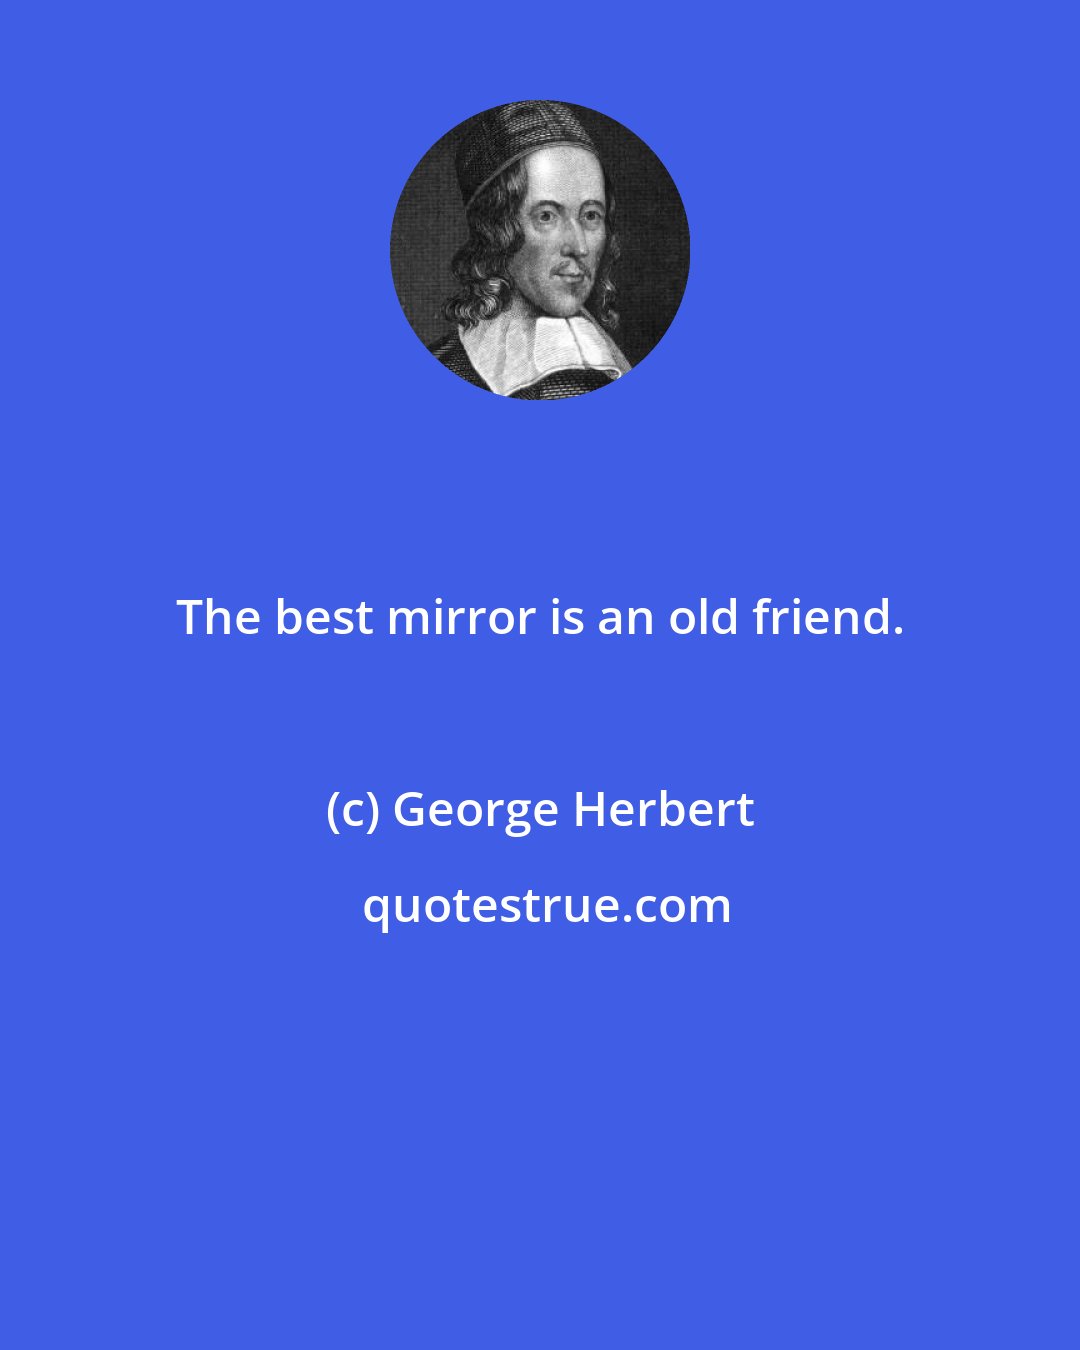 George Herbert: The best mirror is an old friend.